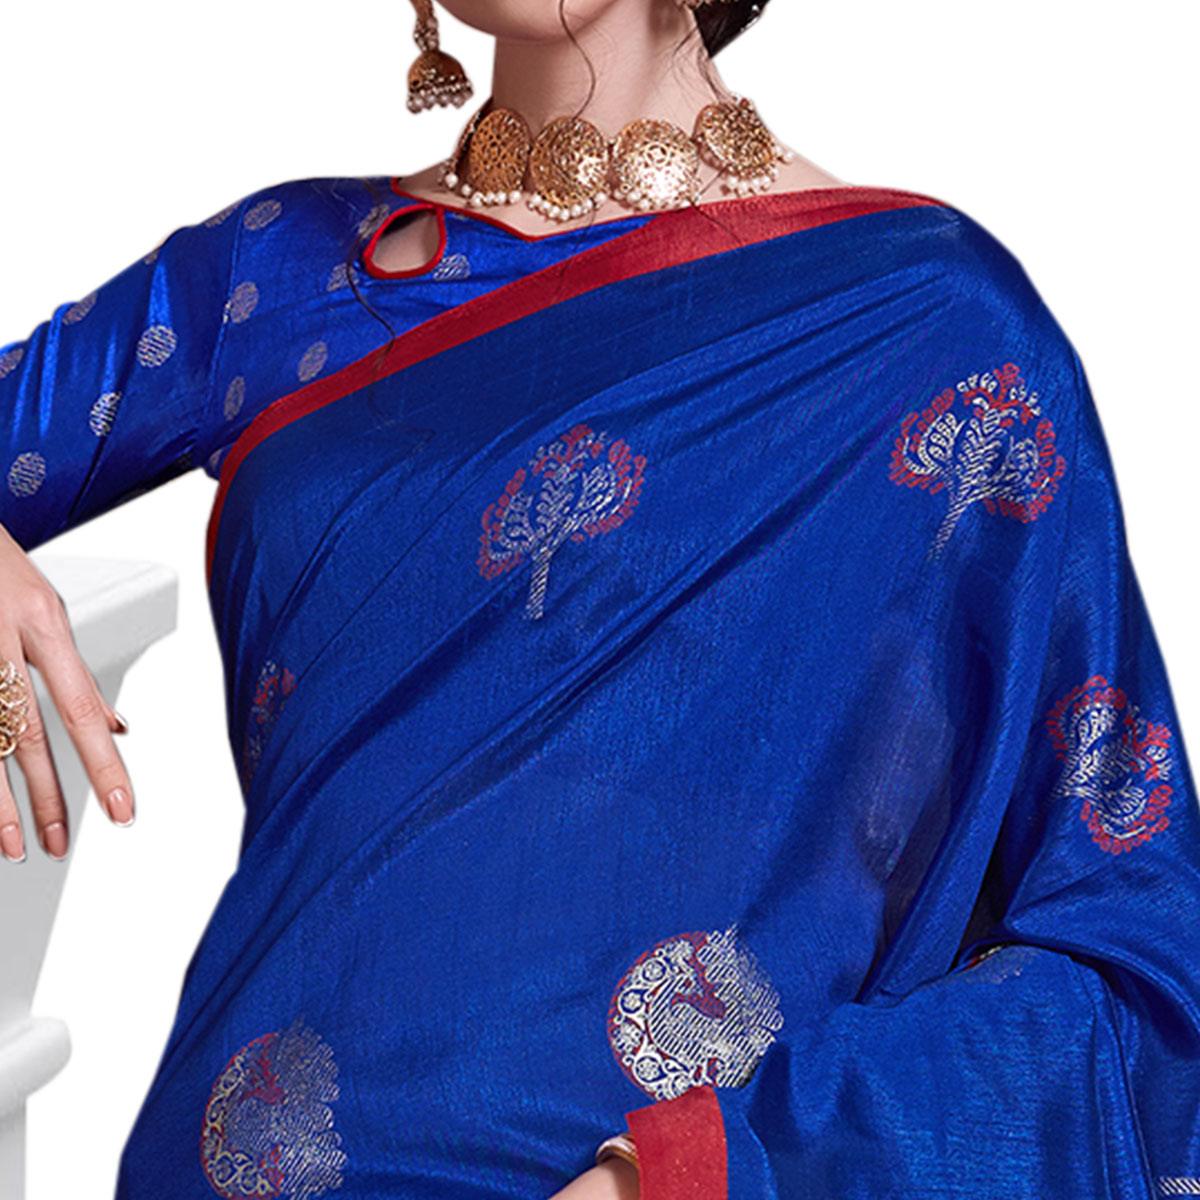 Glowing Blue Colored Festive Wear Printed Art Silk Saree - Peachmode